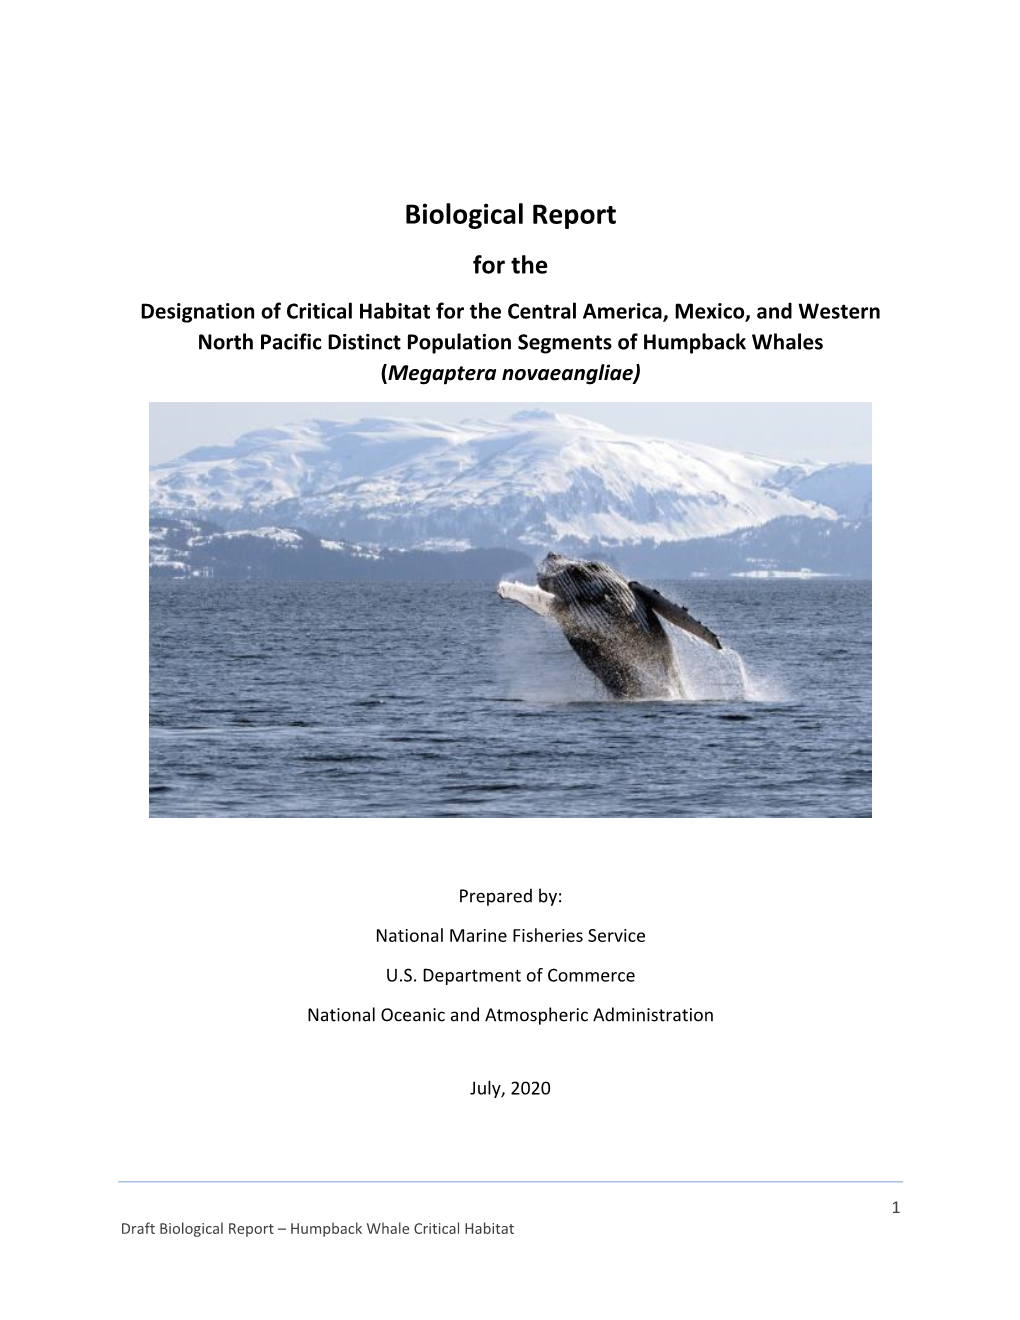 Biological Report for Humpback Whale Critical Habitat